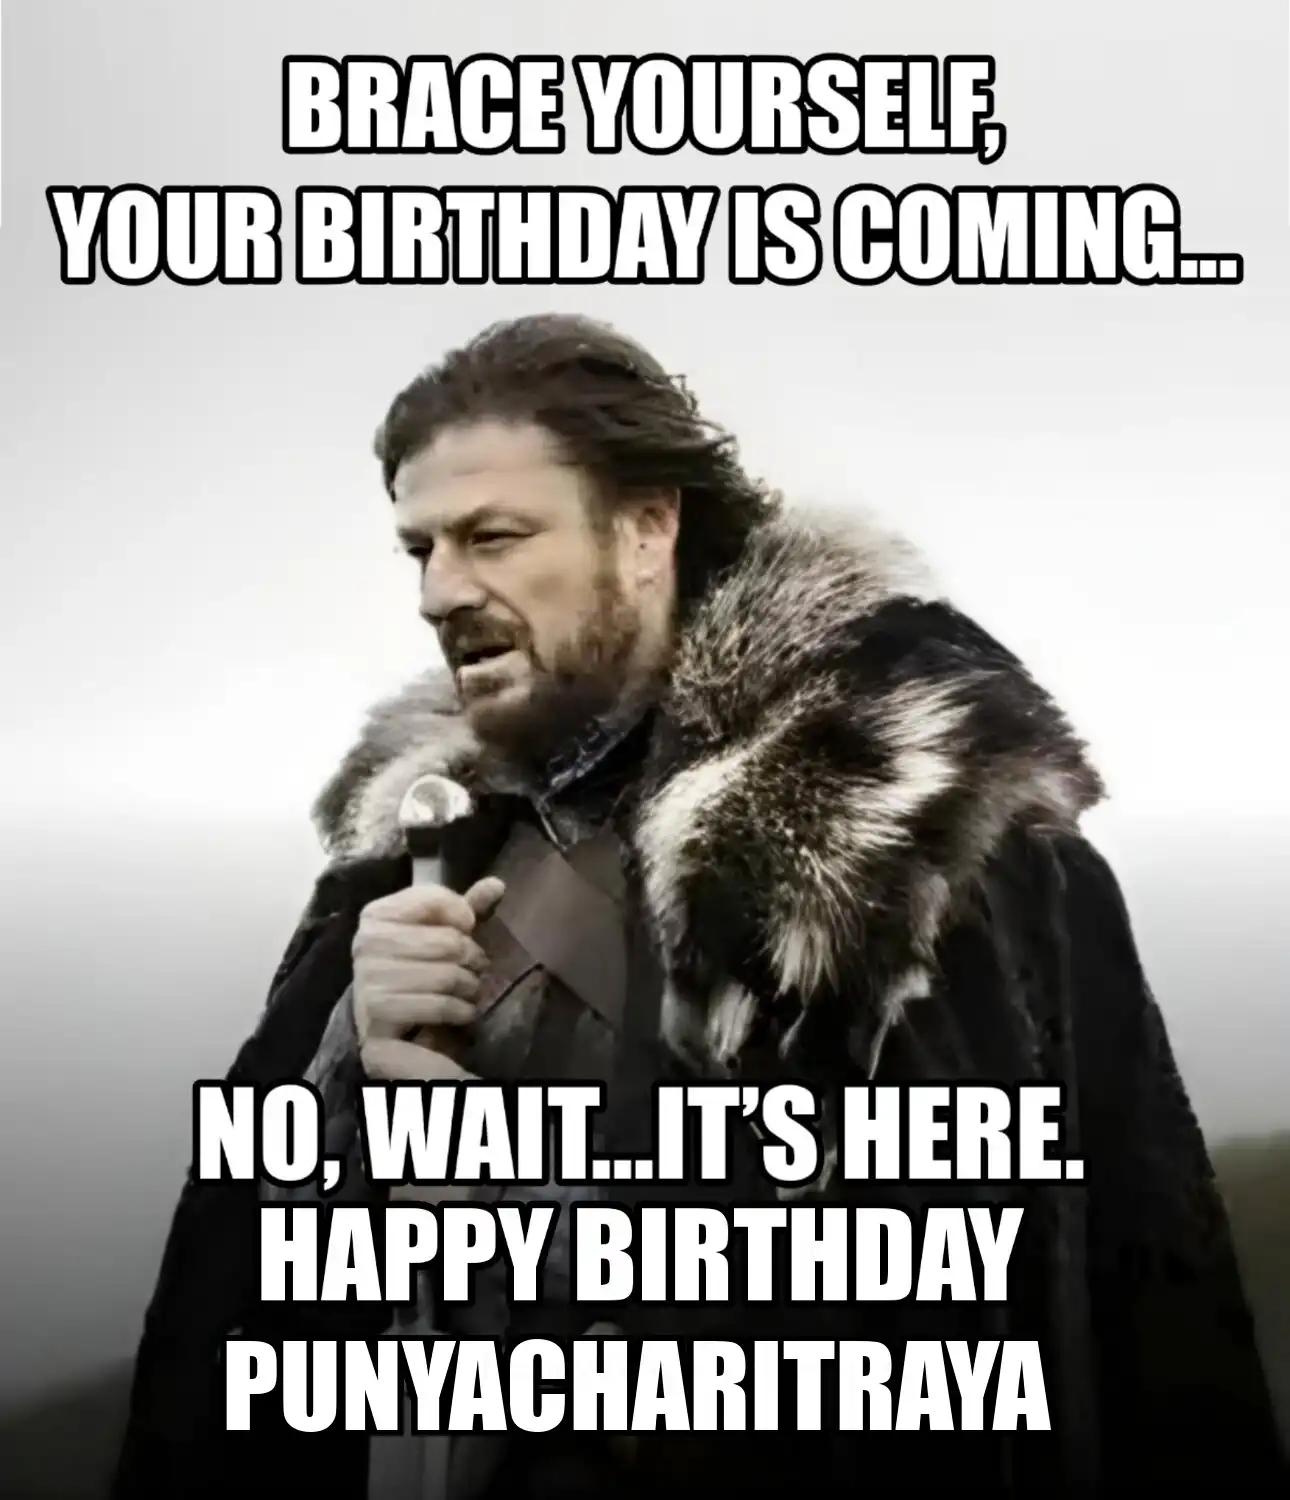 Happy Birthday Punyacharitraya Brace Yourself Your Birthday Is Coming Meme